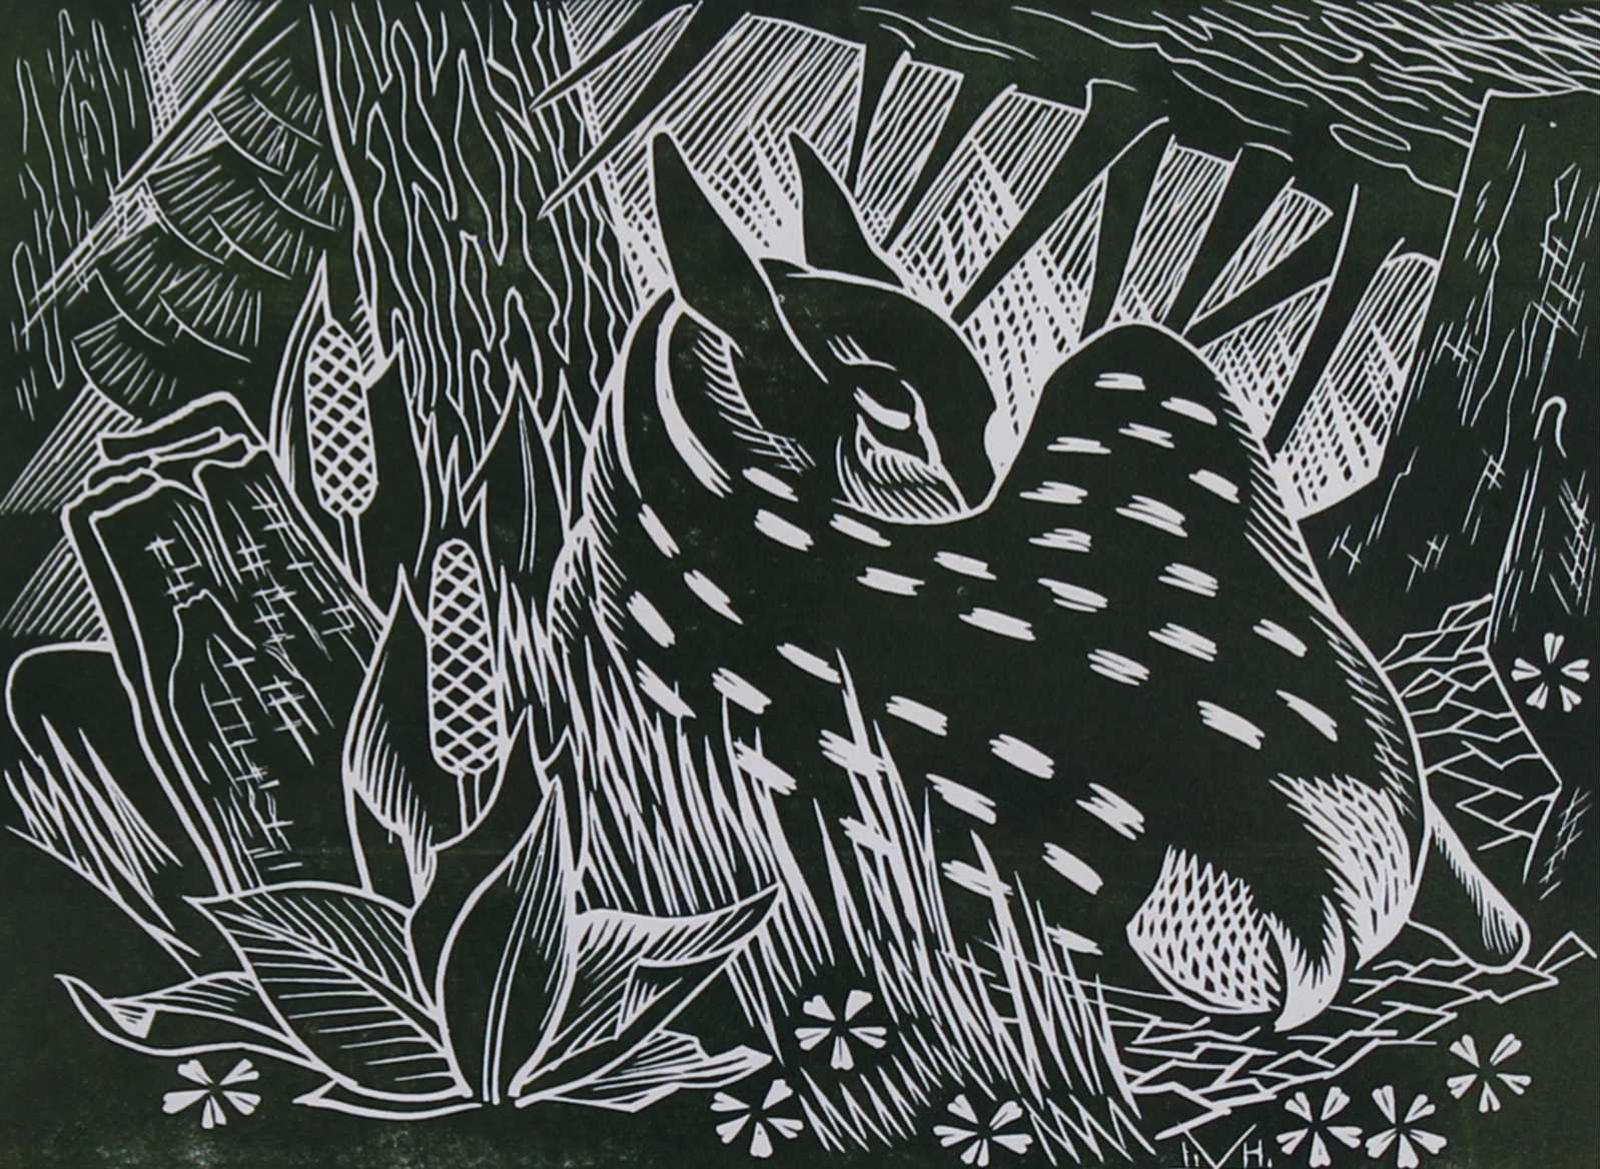 Illingworth Holey (Buck) Kerr (1905-1989) - Afternoon of a Fawn; ed. #4/100